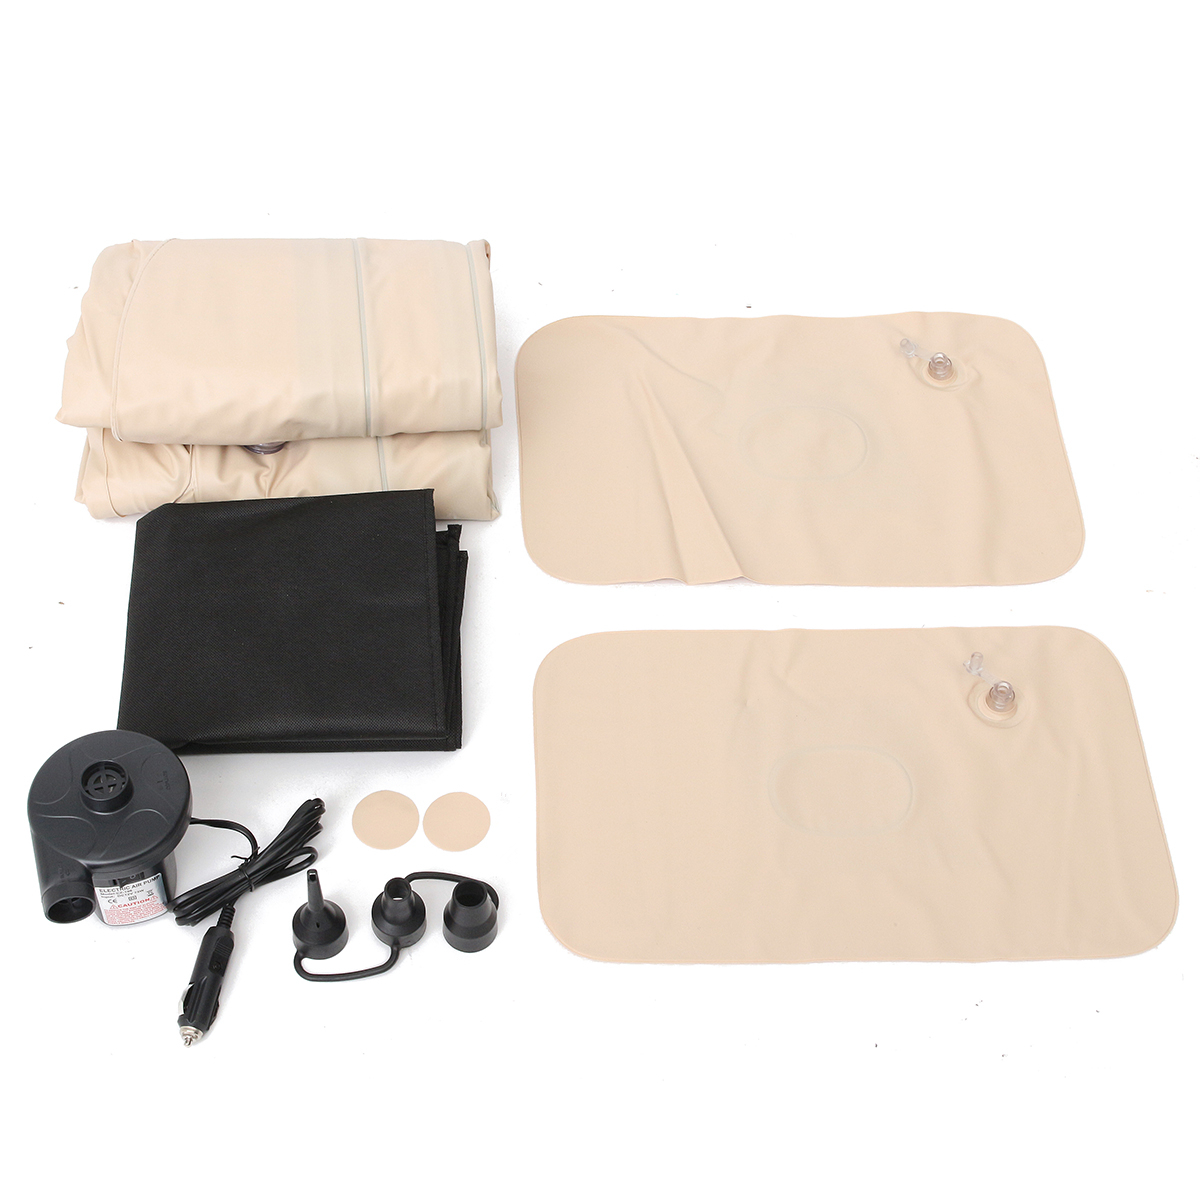 Car Travel Back Seat Mattress Inflatable Air Bed Sleeping Camping SUV MPV BlueVD 